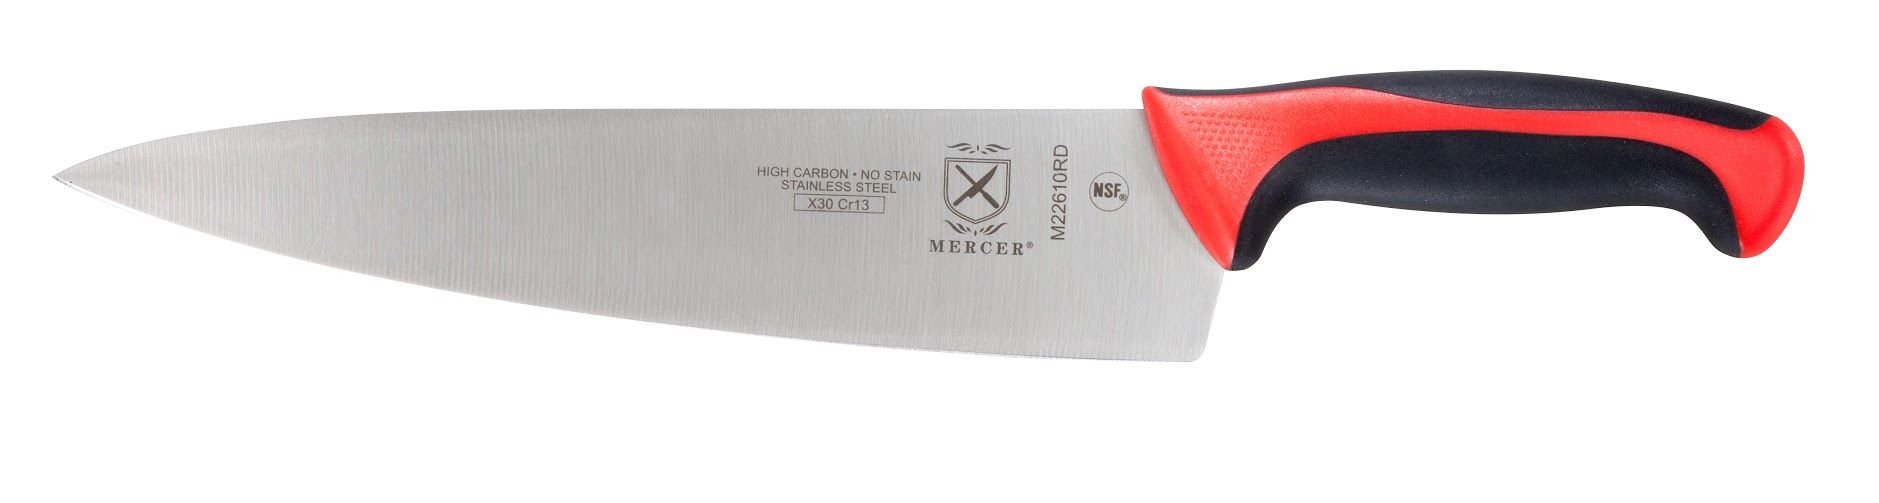 Millennia 10 Chef's Knife